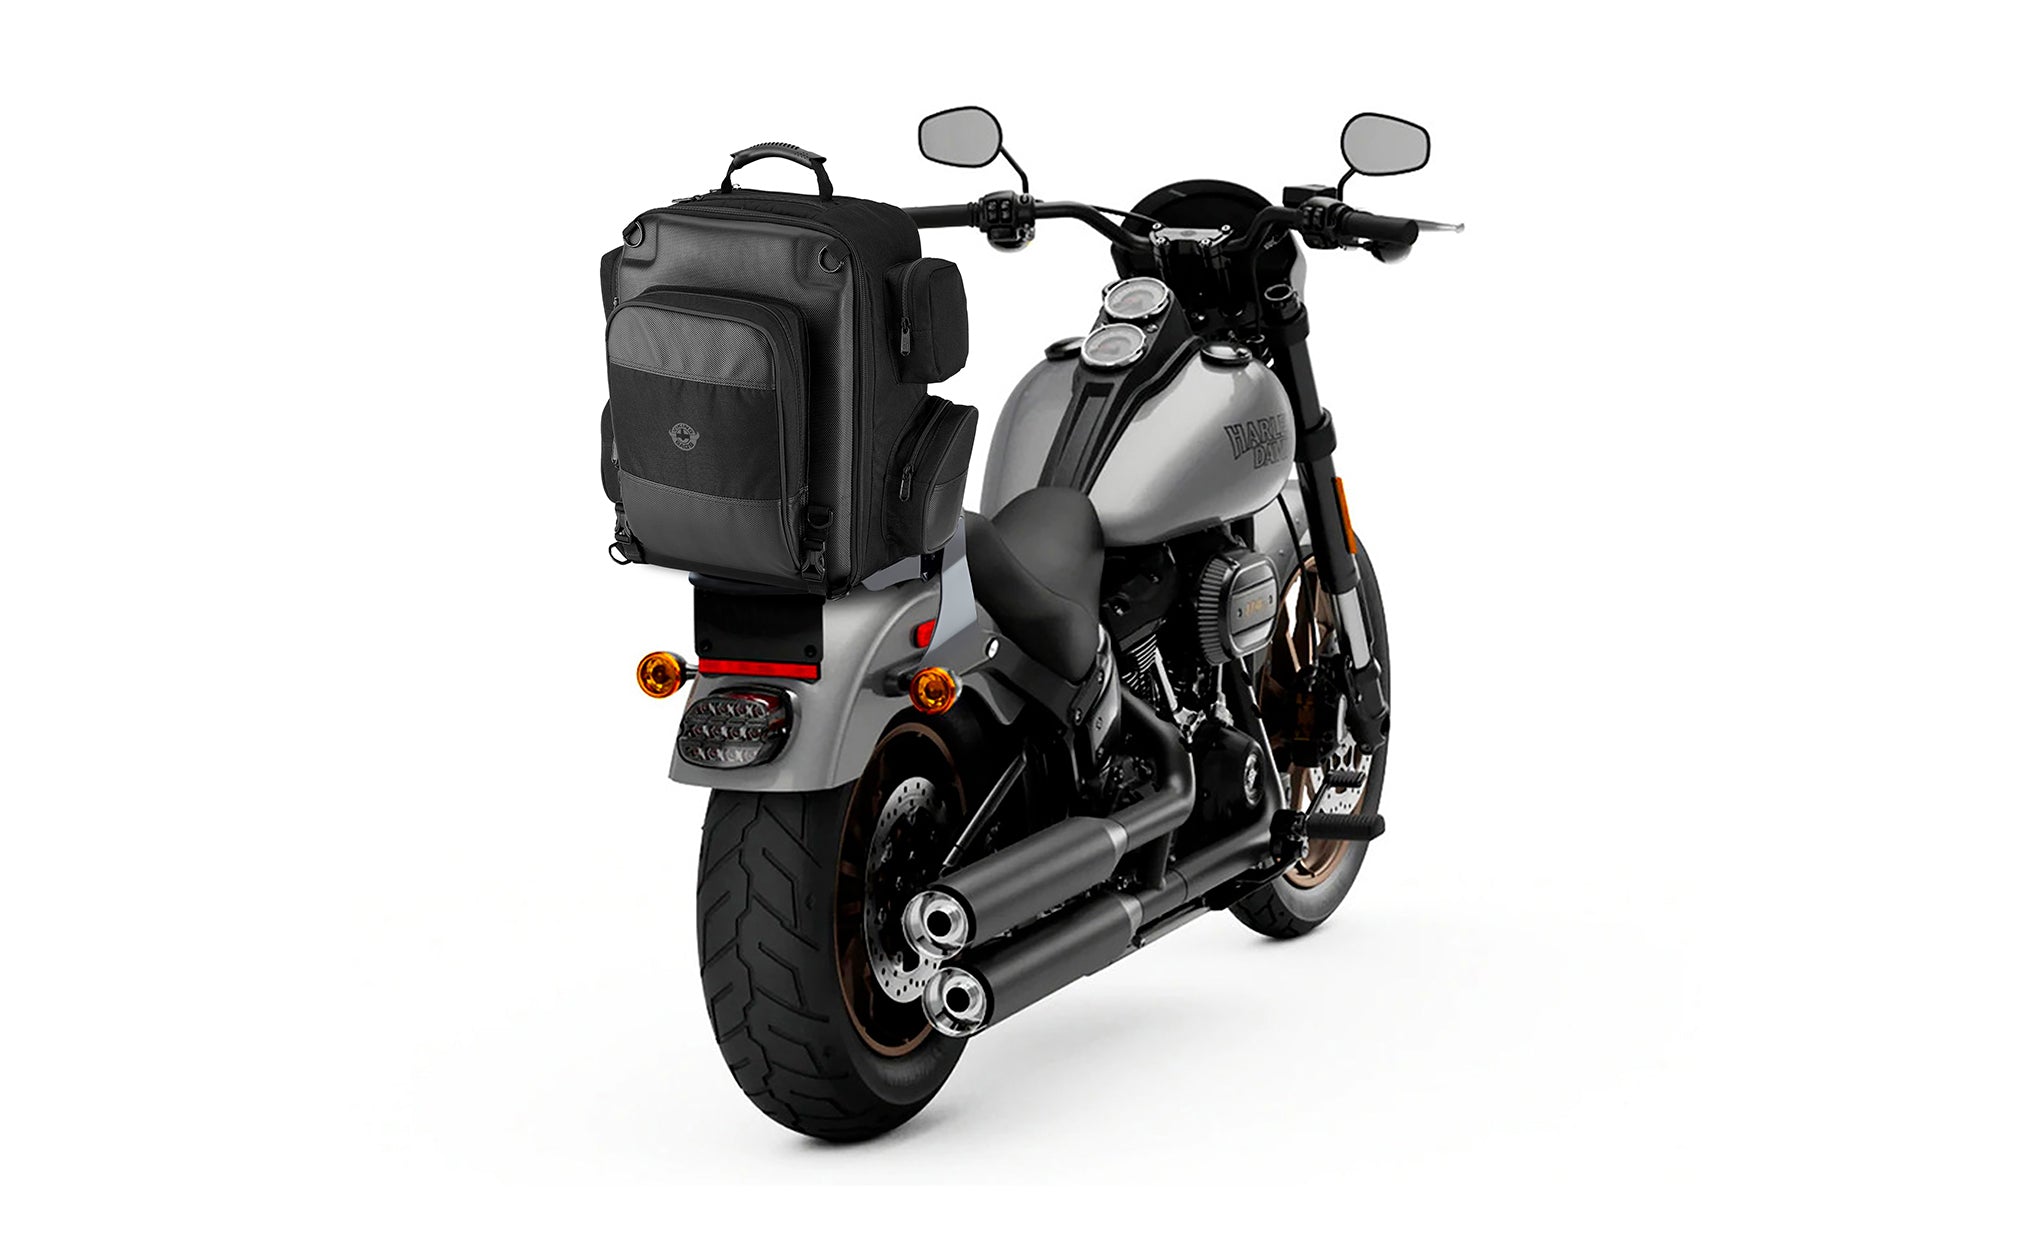 Viking Voyage Large Kawasaki Motorcycle Backpack Bag on Bike View @expand